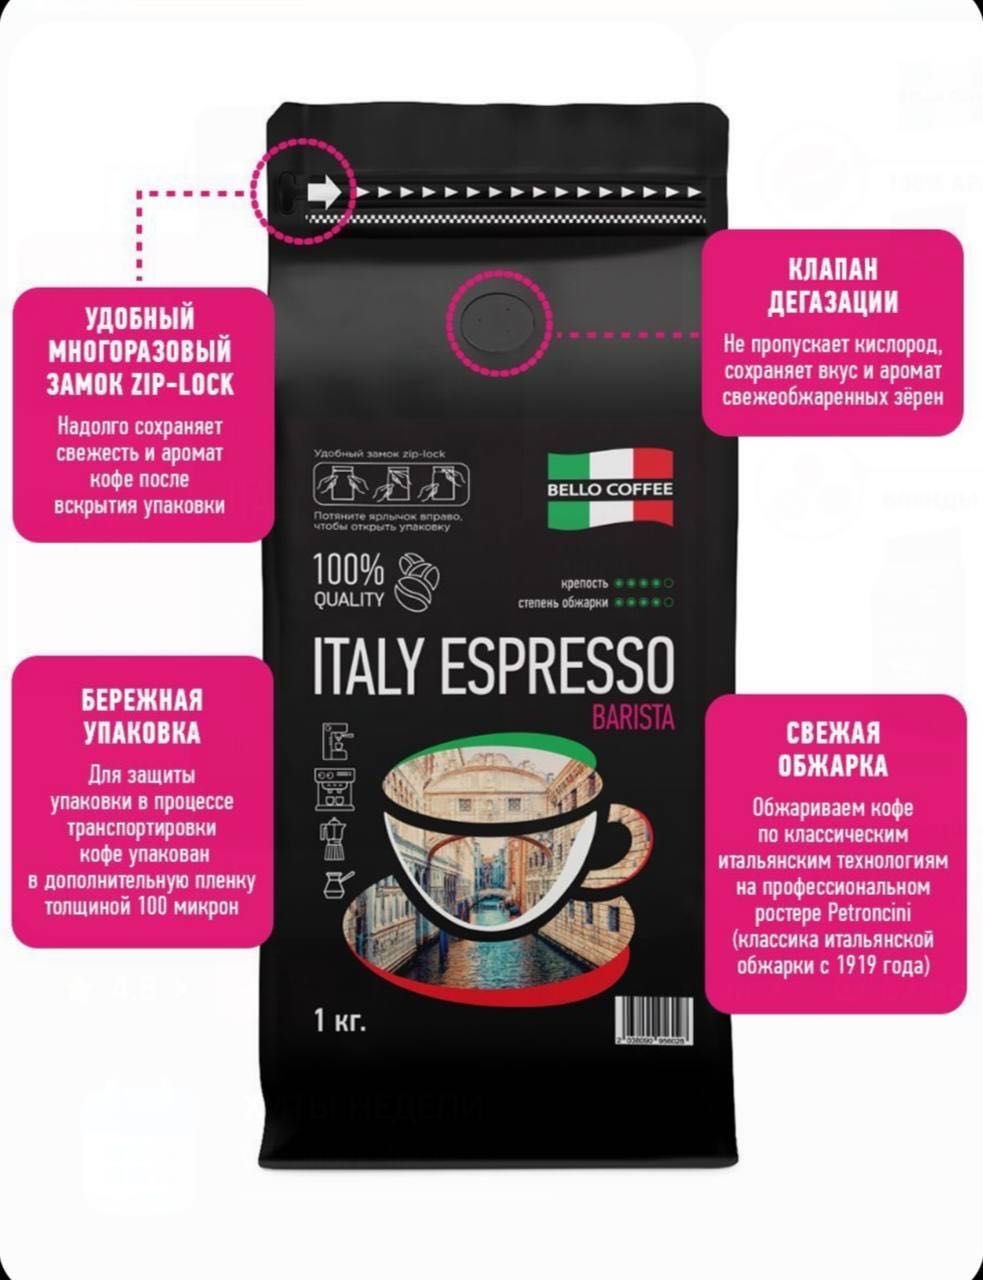 Bello coffee/ зерновое кофе, ITALIA ESPRESSO Barista 1 кг